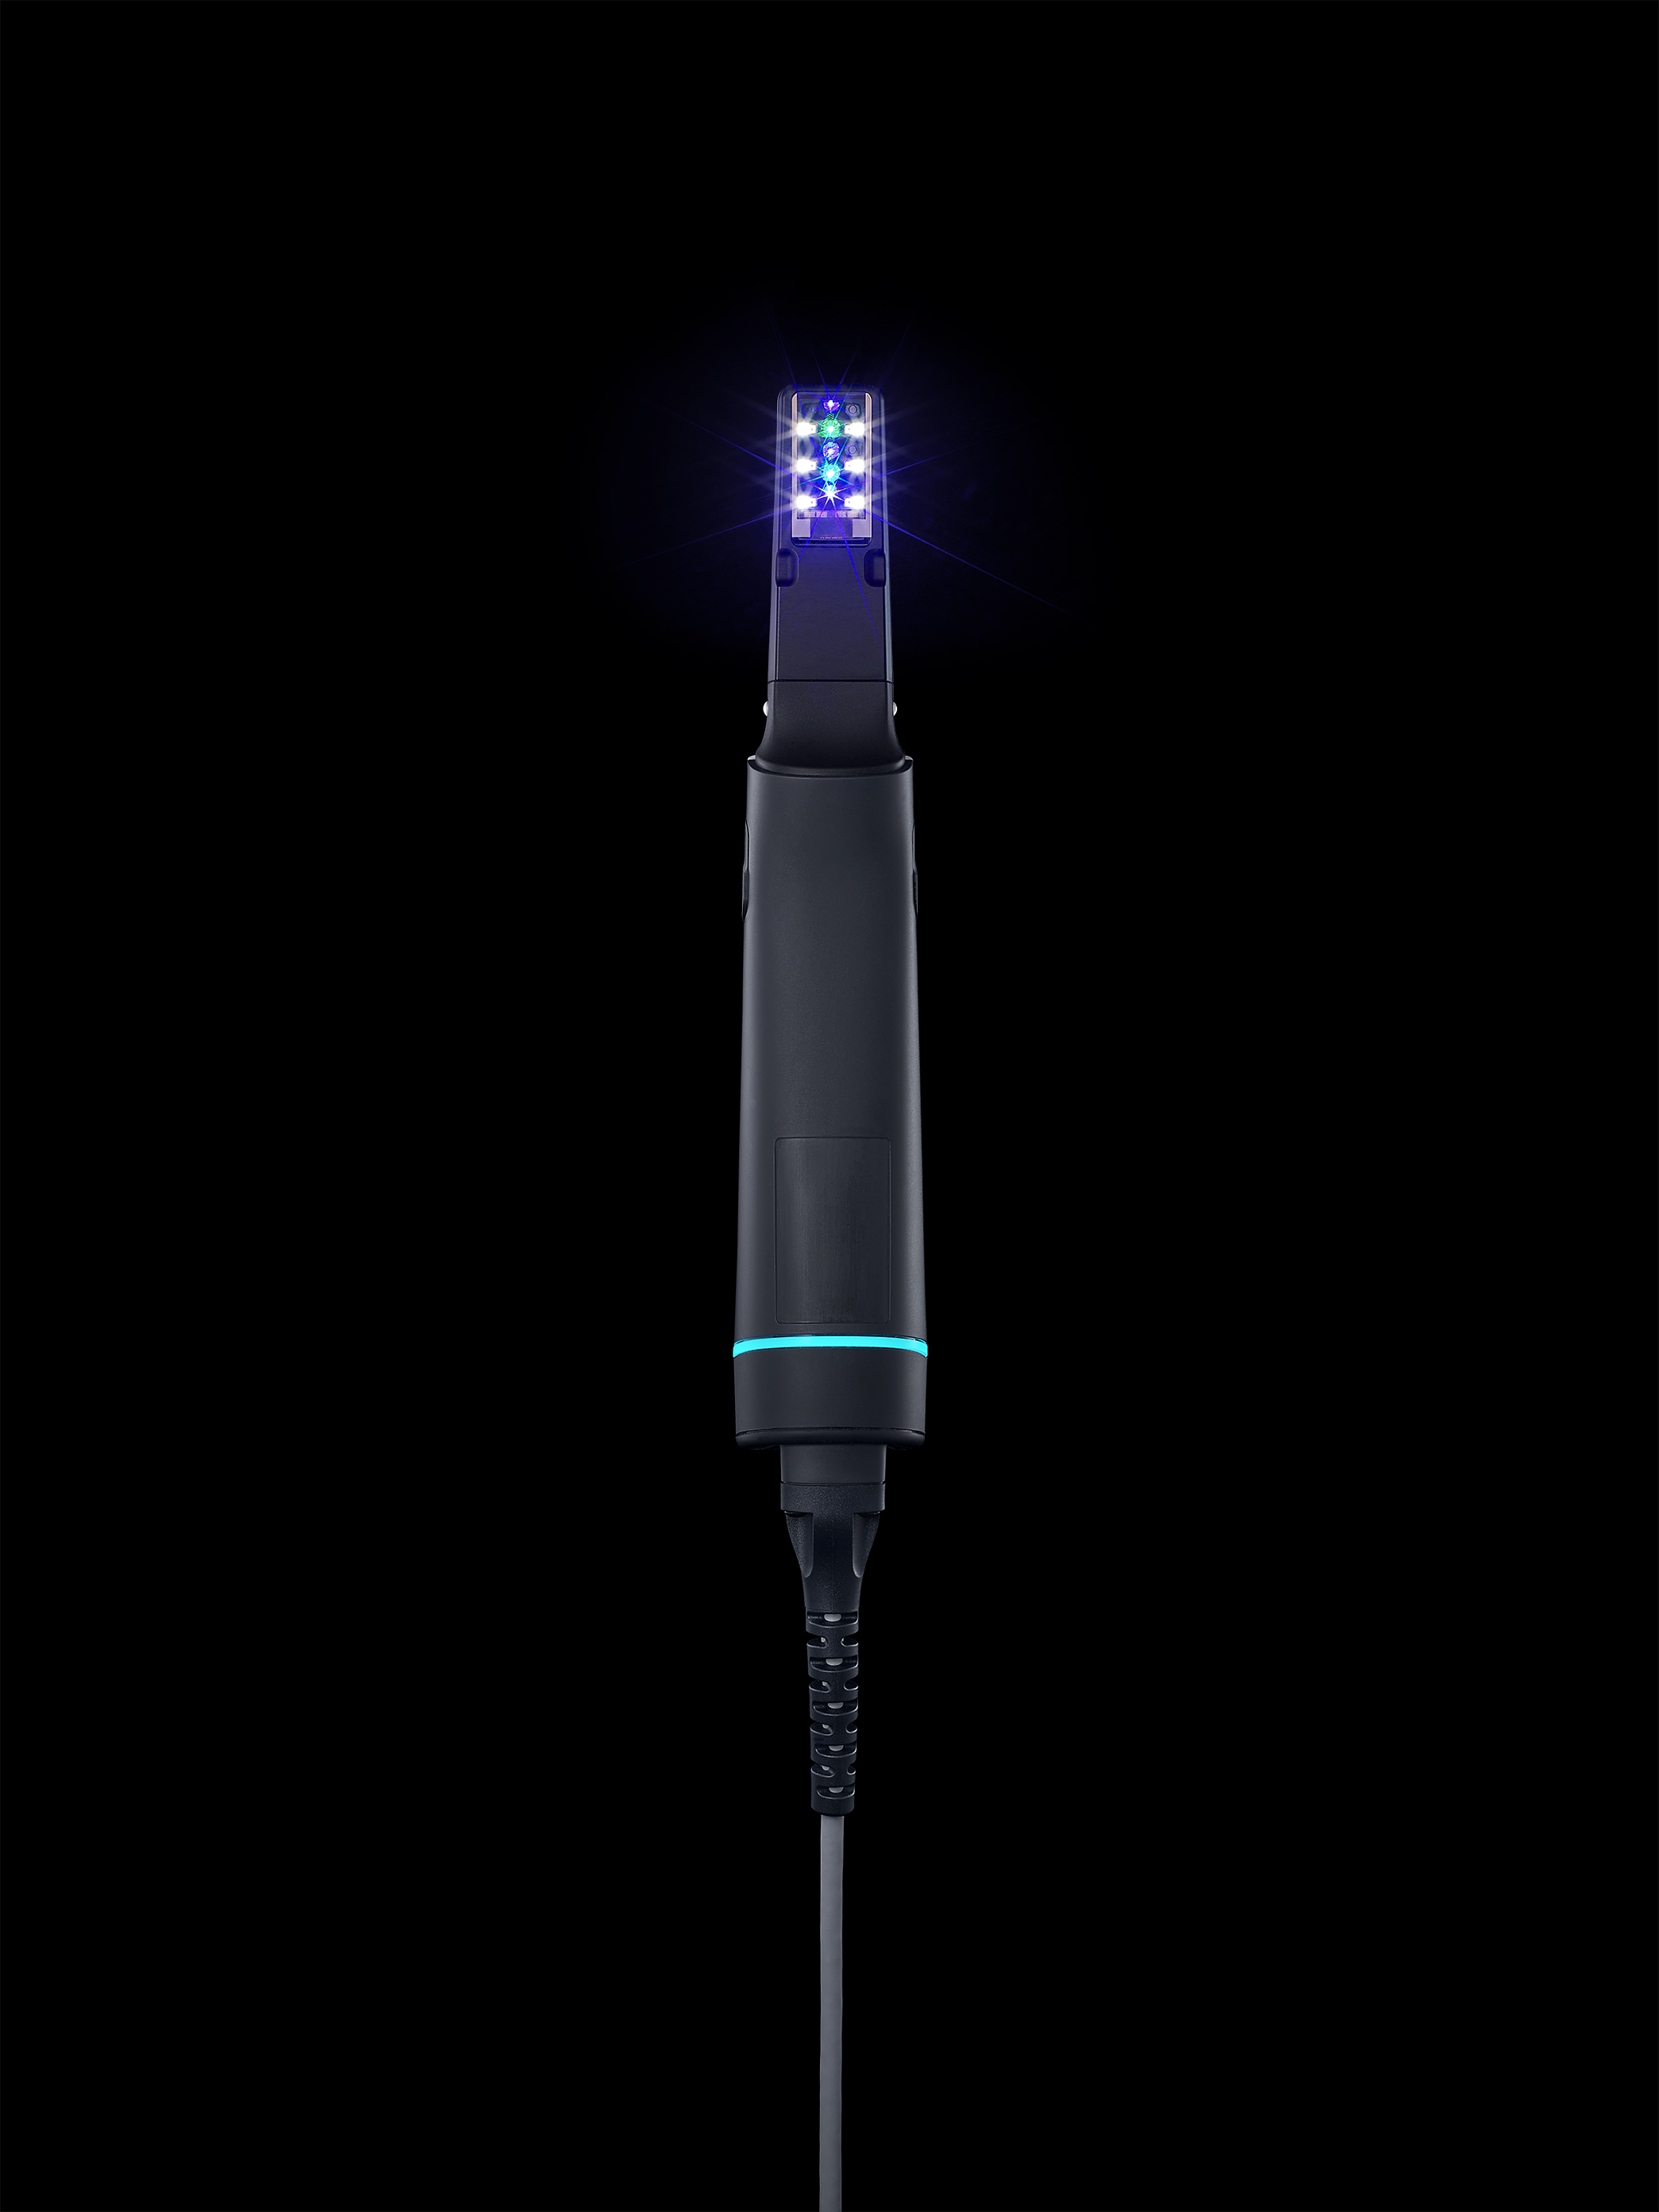 Align Technology Unveils iTero Lumina Intraoral Scanner